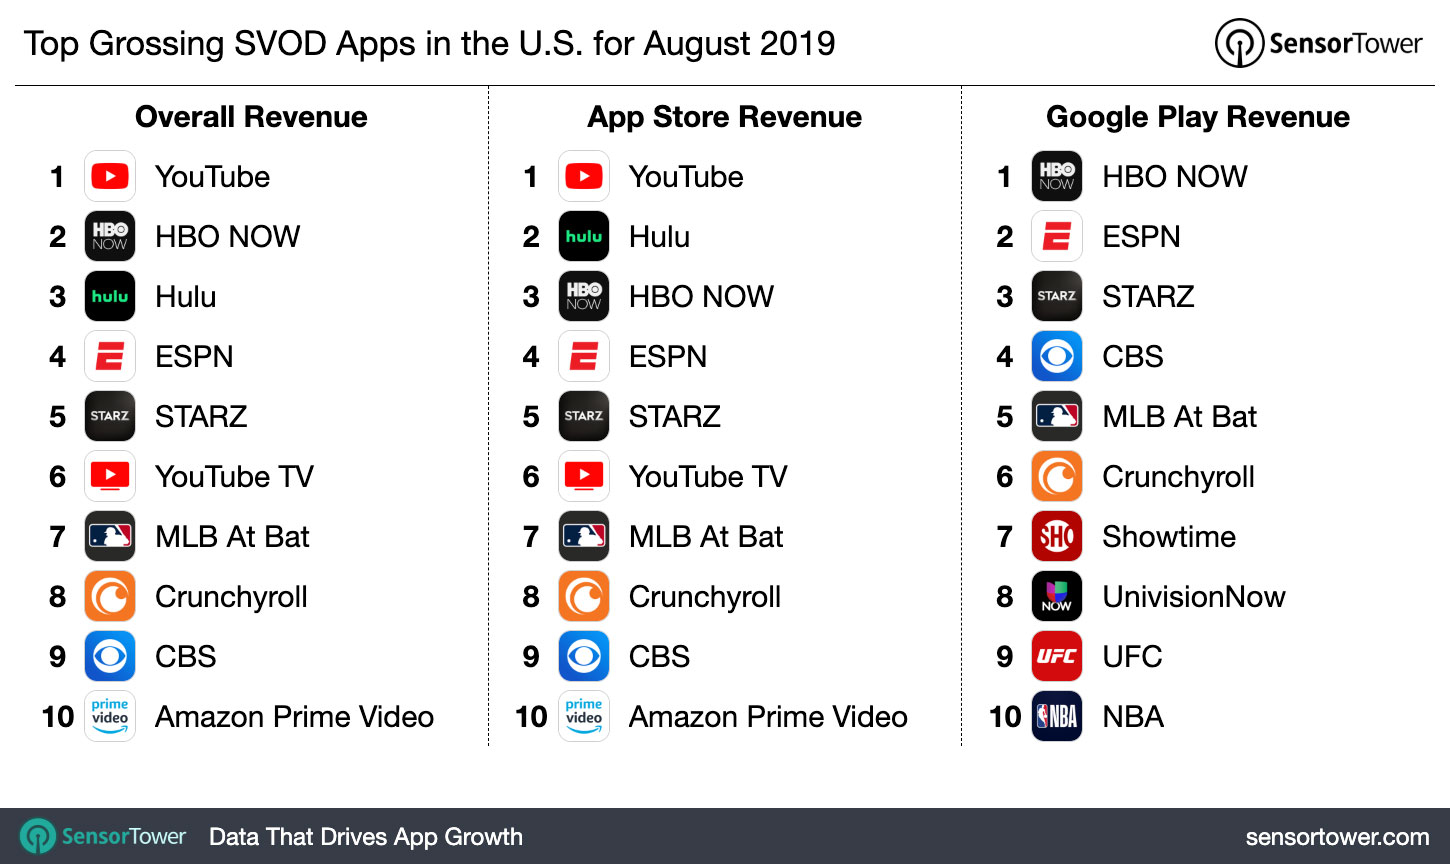 Top Grossing SVOD Apps in the U.S